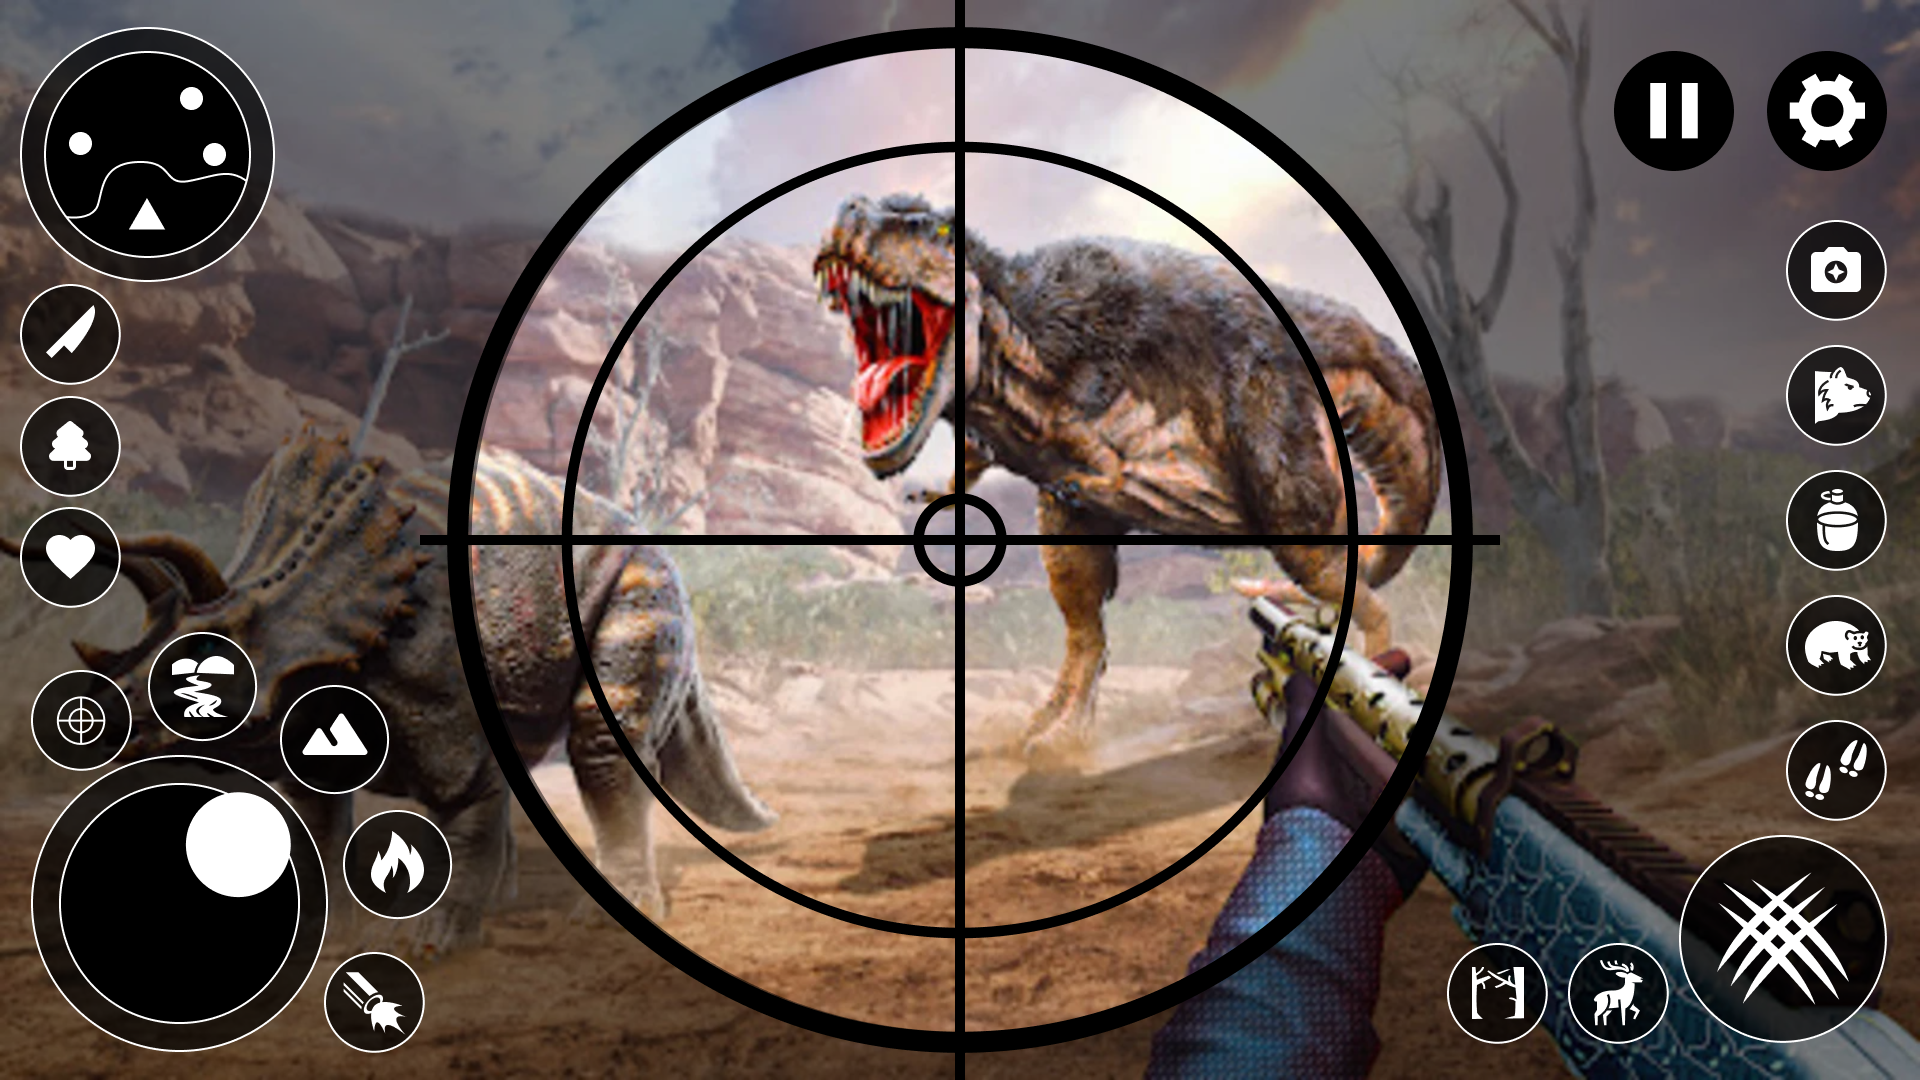 Screenshot 1 of Juego de Pistolas: Dinosaurios 4.1.2